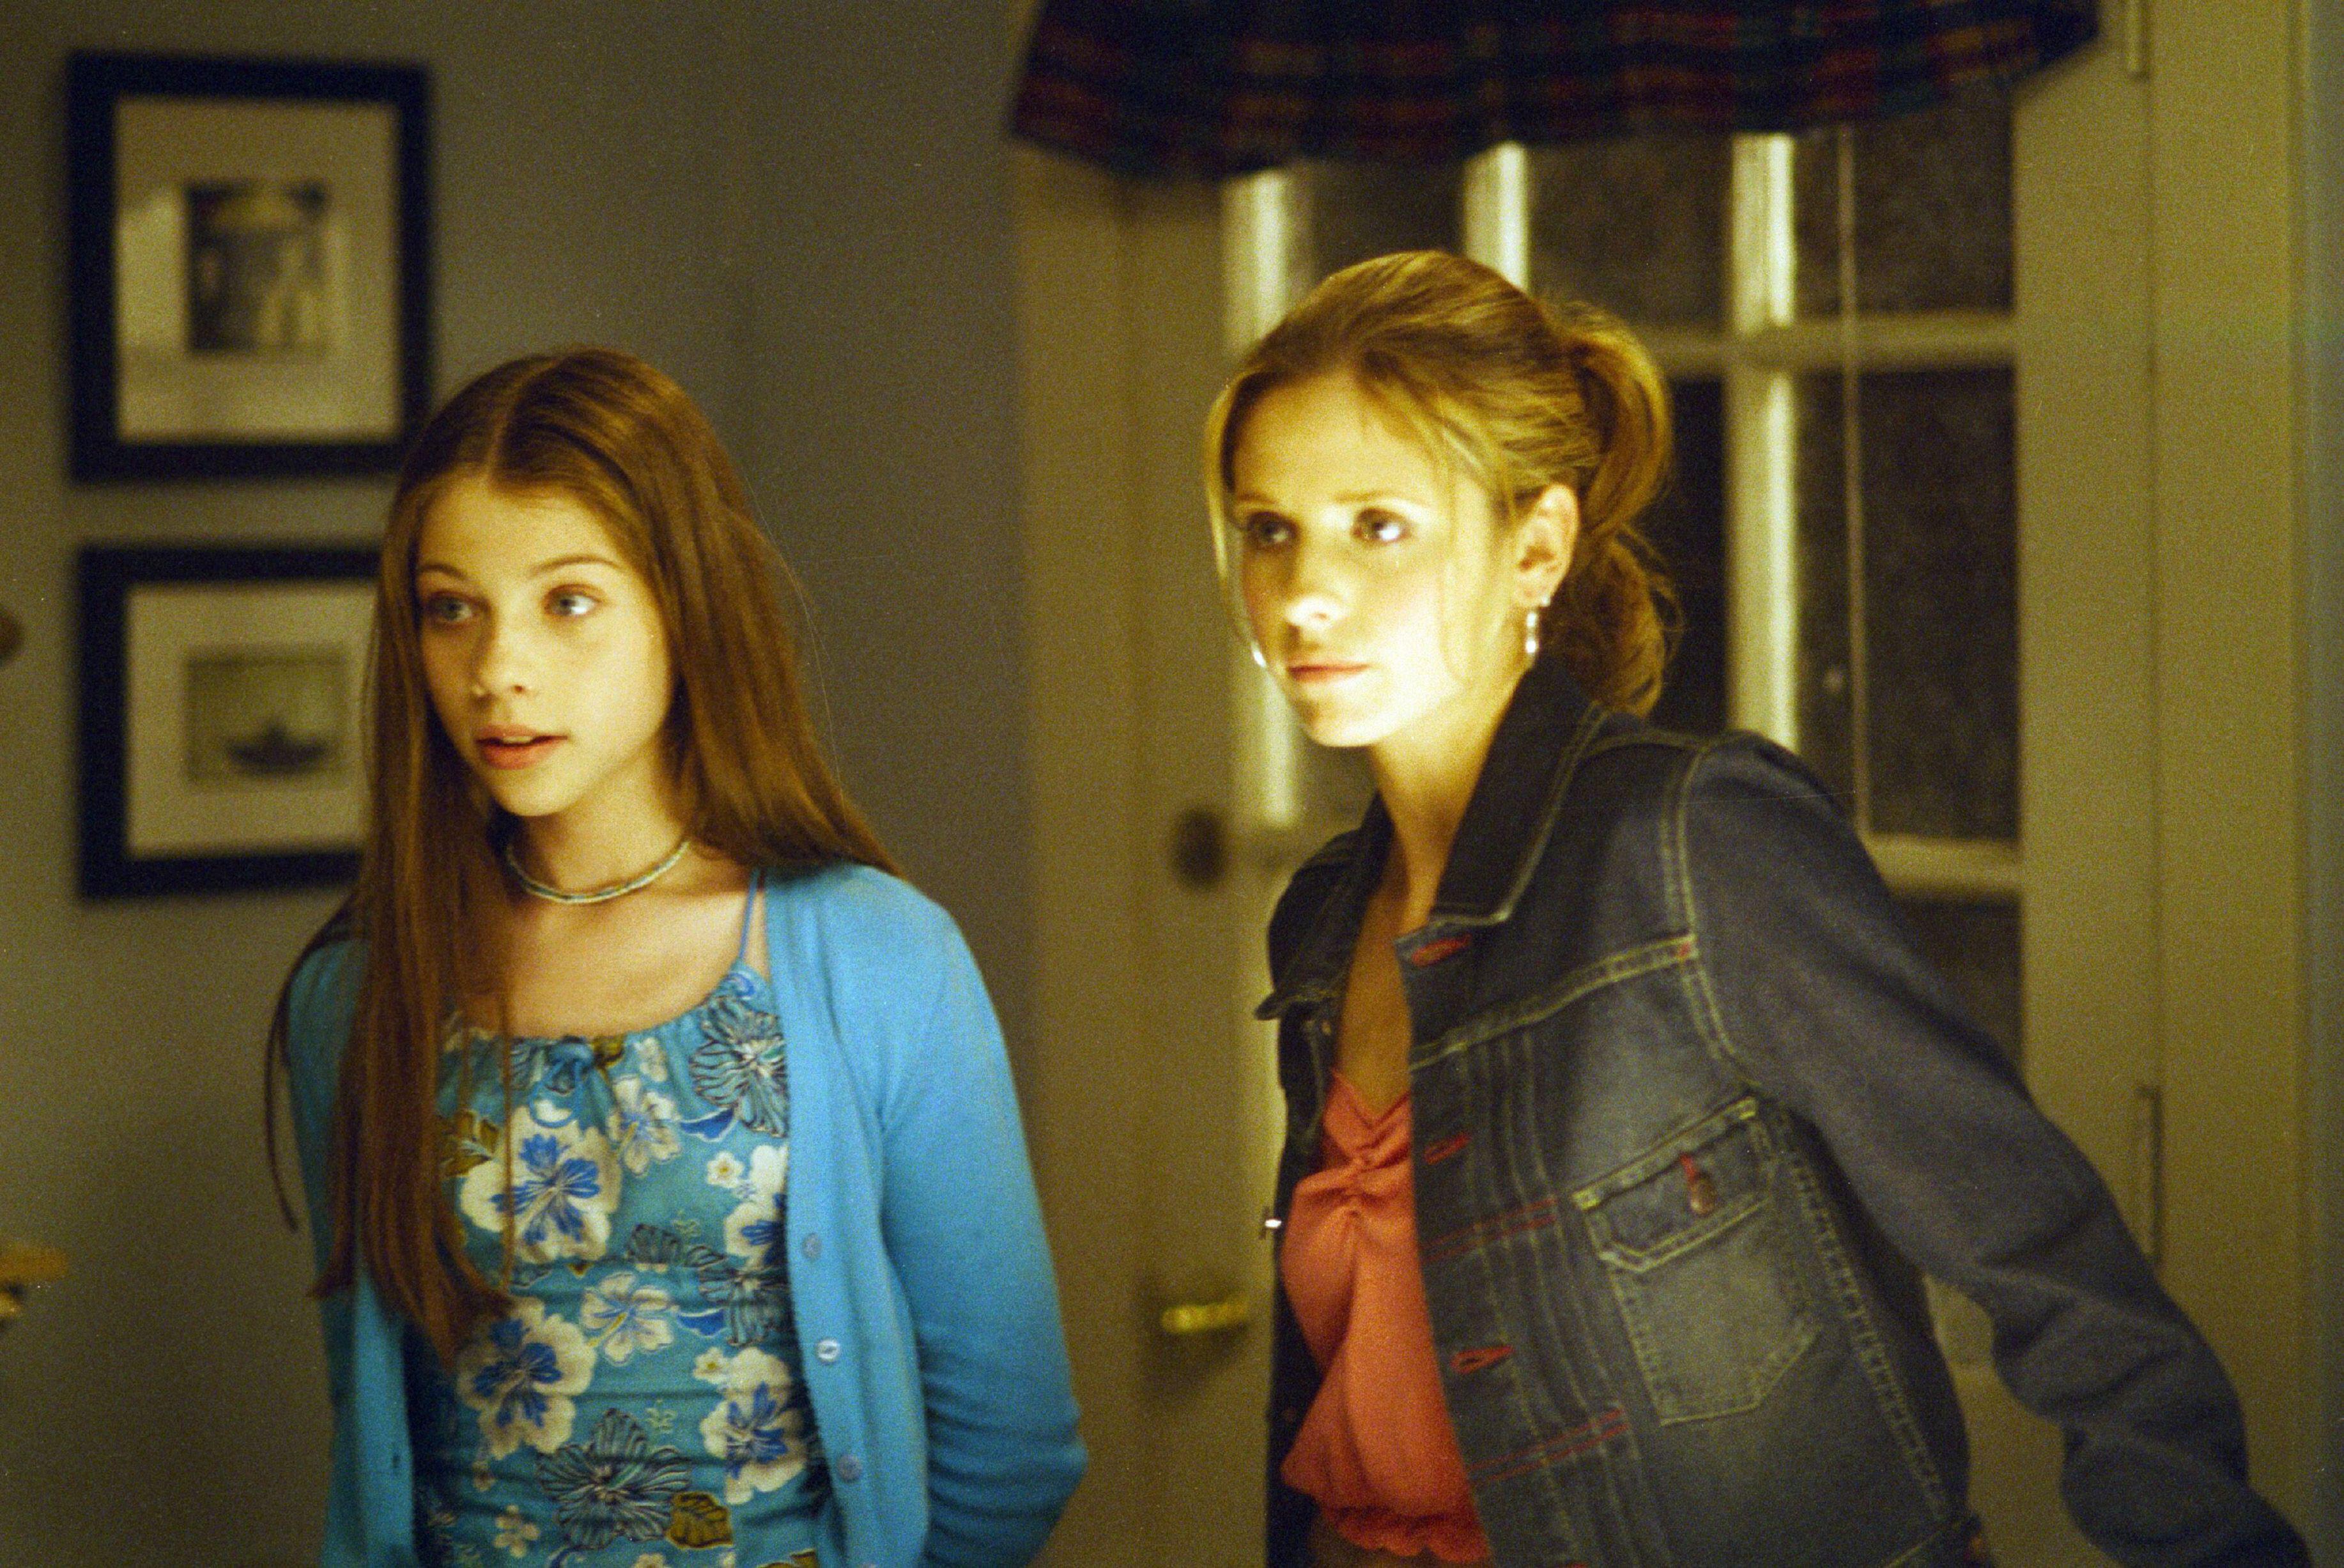 Michelle starred alongside Sarah Michelle Gellar on Buffy the Vampire Slayer